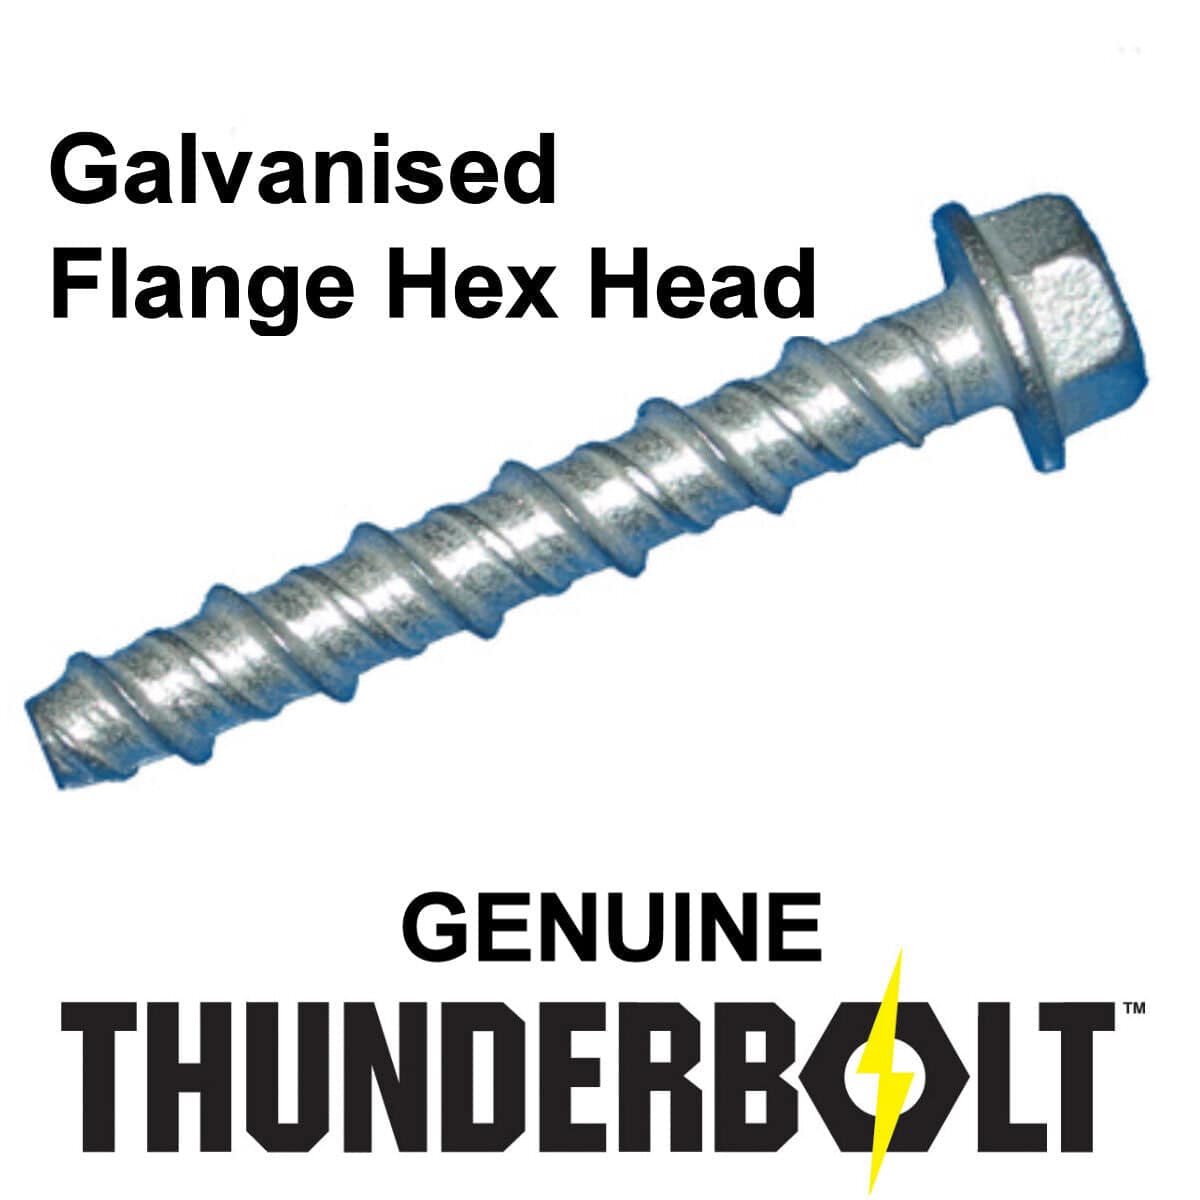 M6 Galvanised Flange Hex Head Genuine Thunderbolts Masonry Concrete An